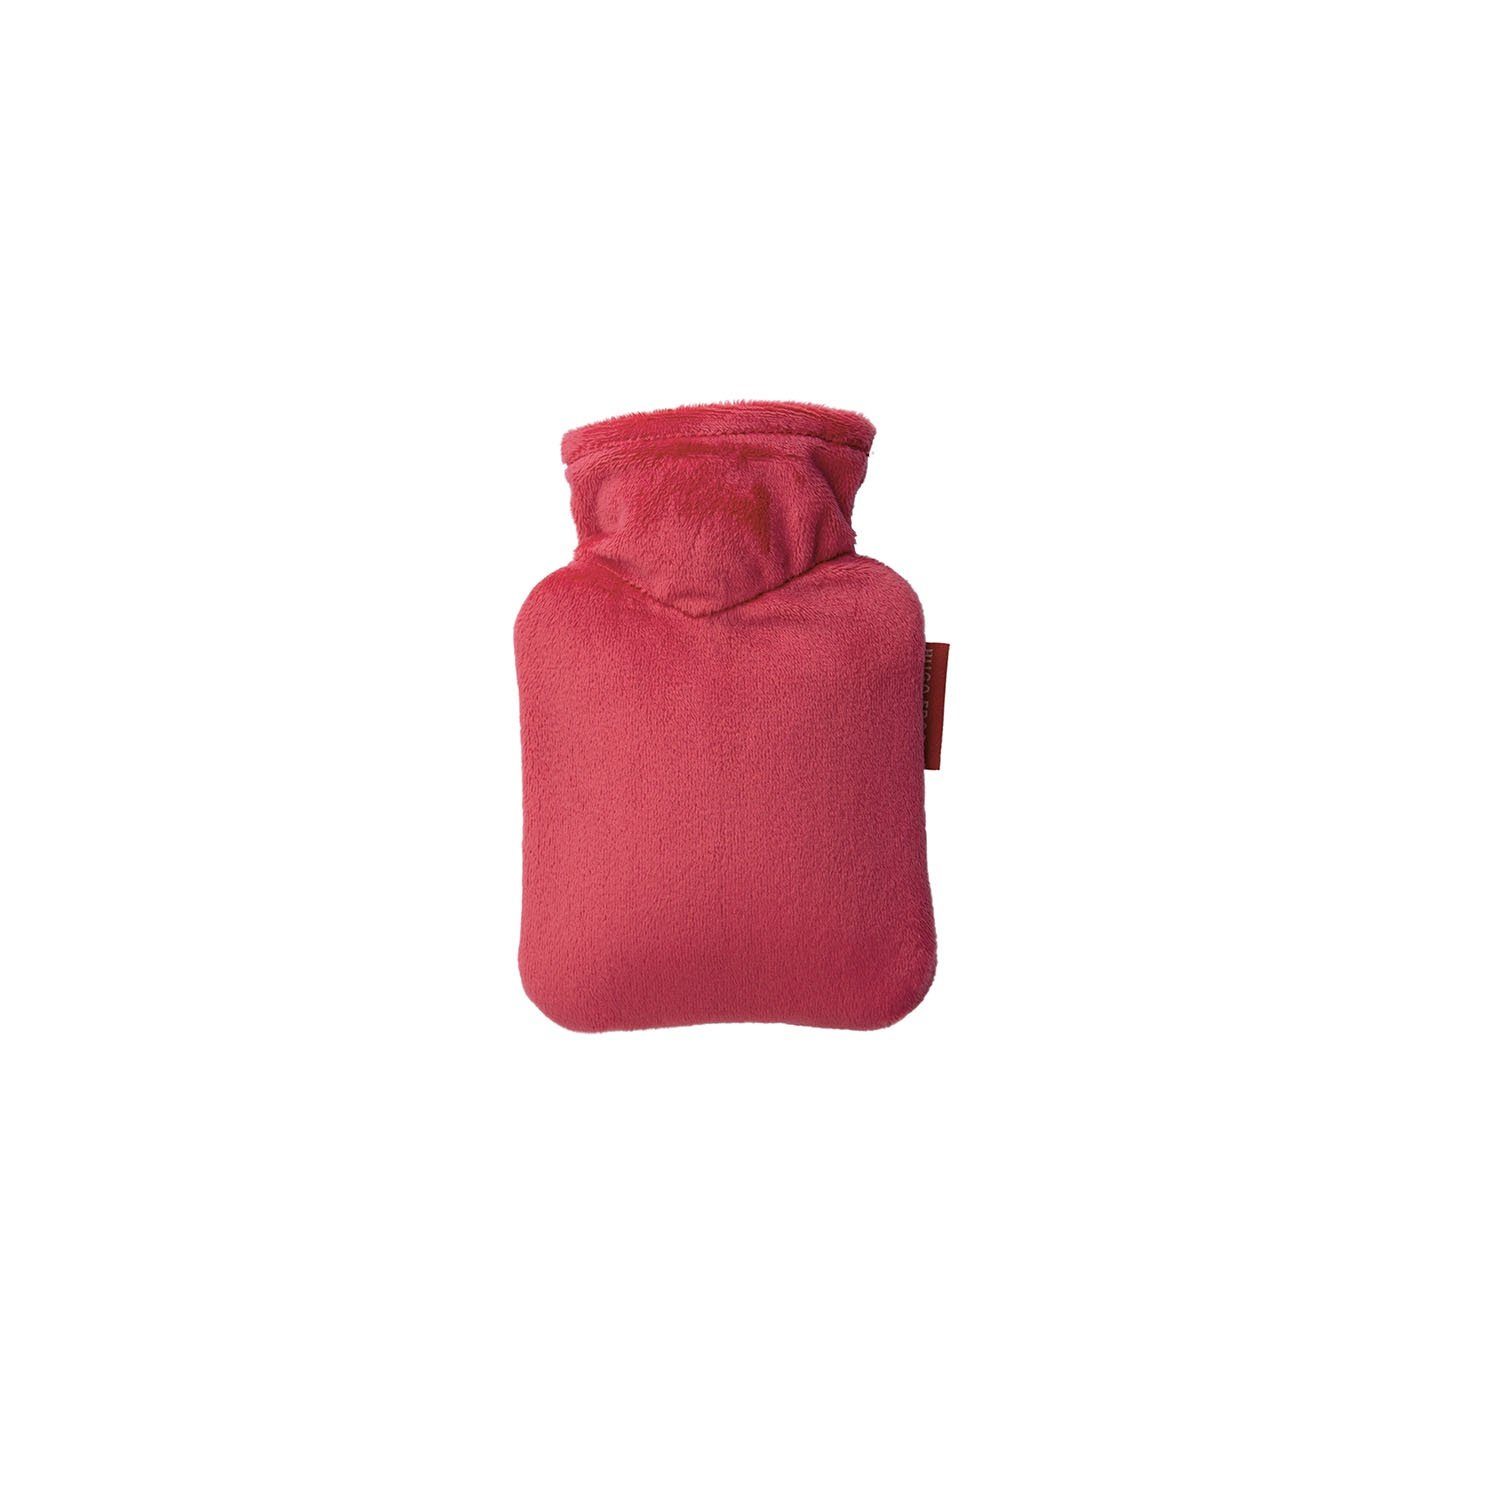 Hugo Frosch Wärmflasche - Mini-Wärmflasche 0,2 l mit Veloursbezug tomatenrot, Made in Germany